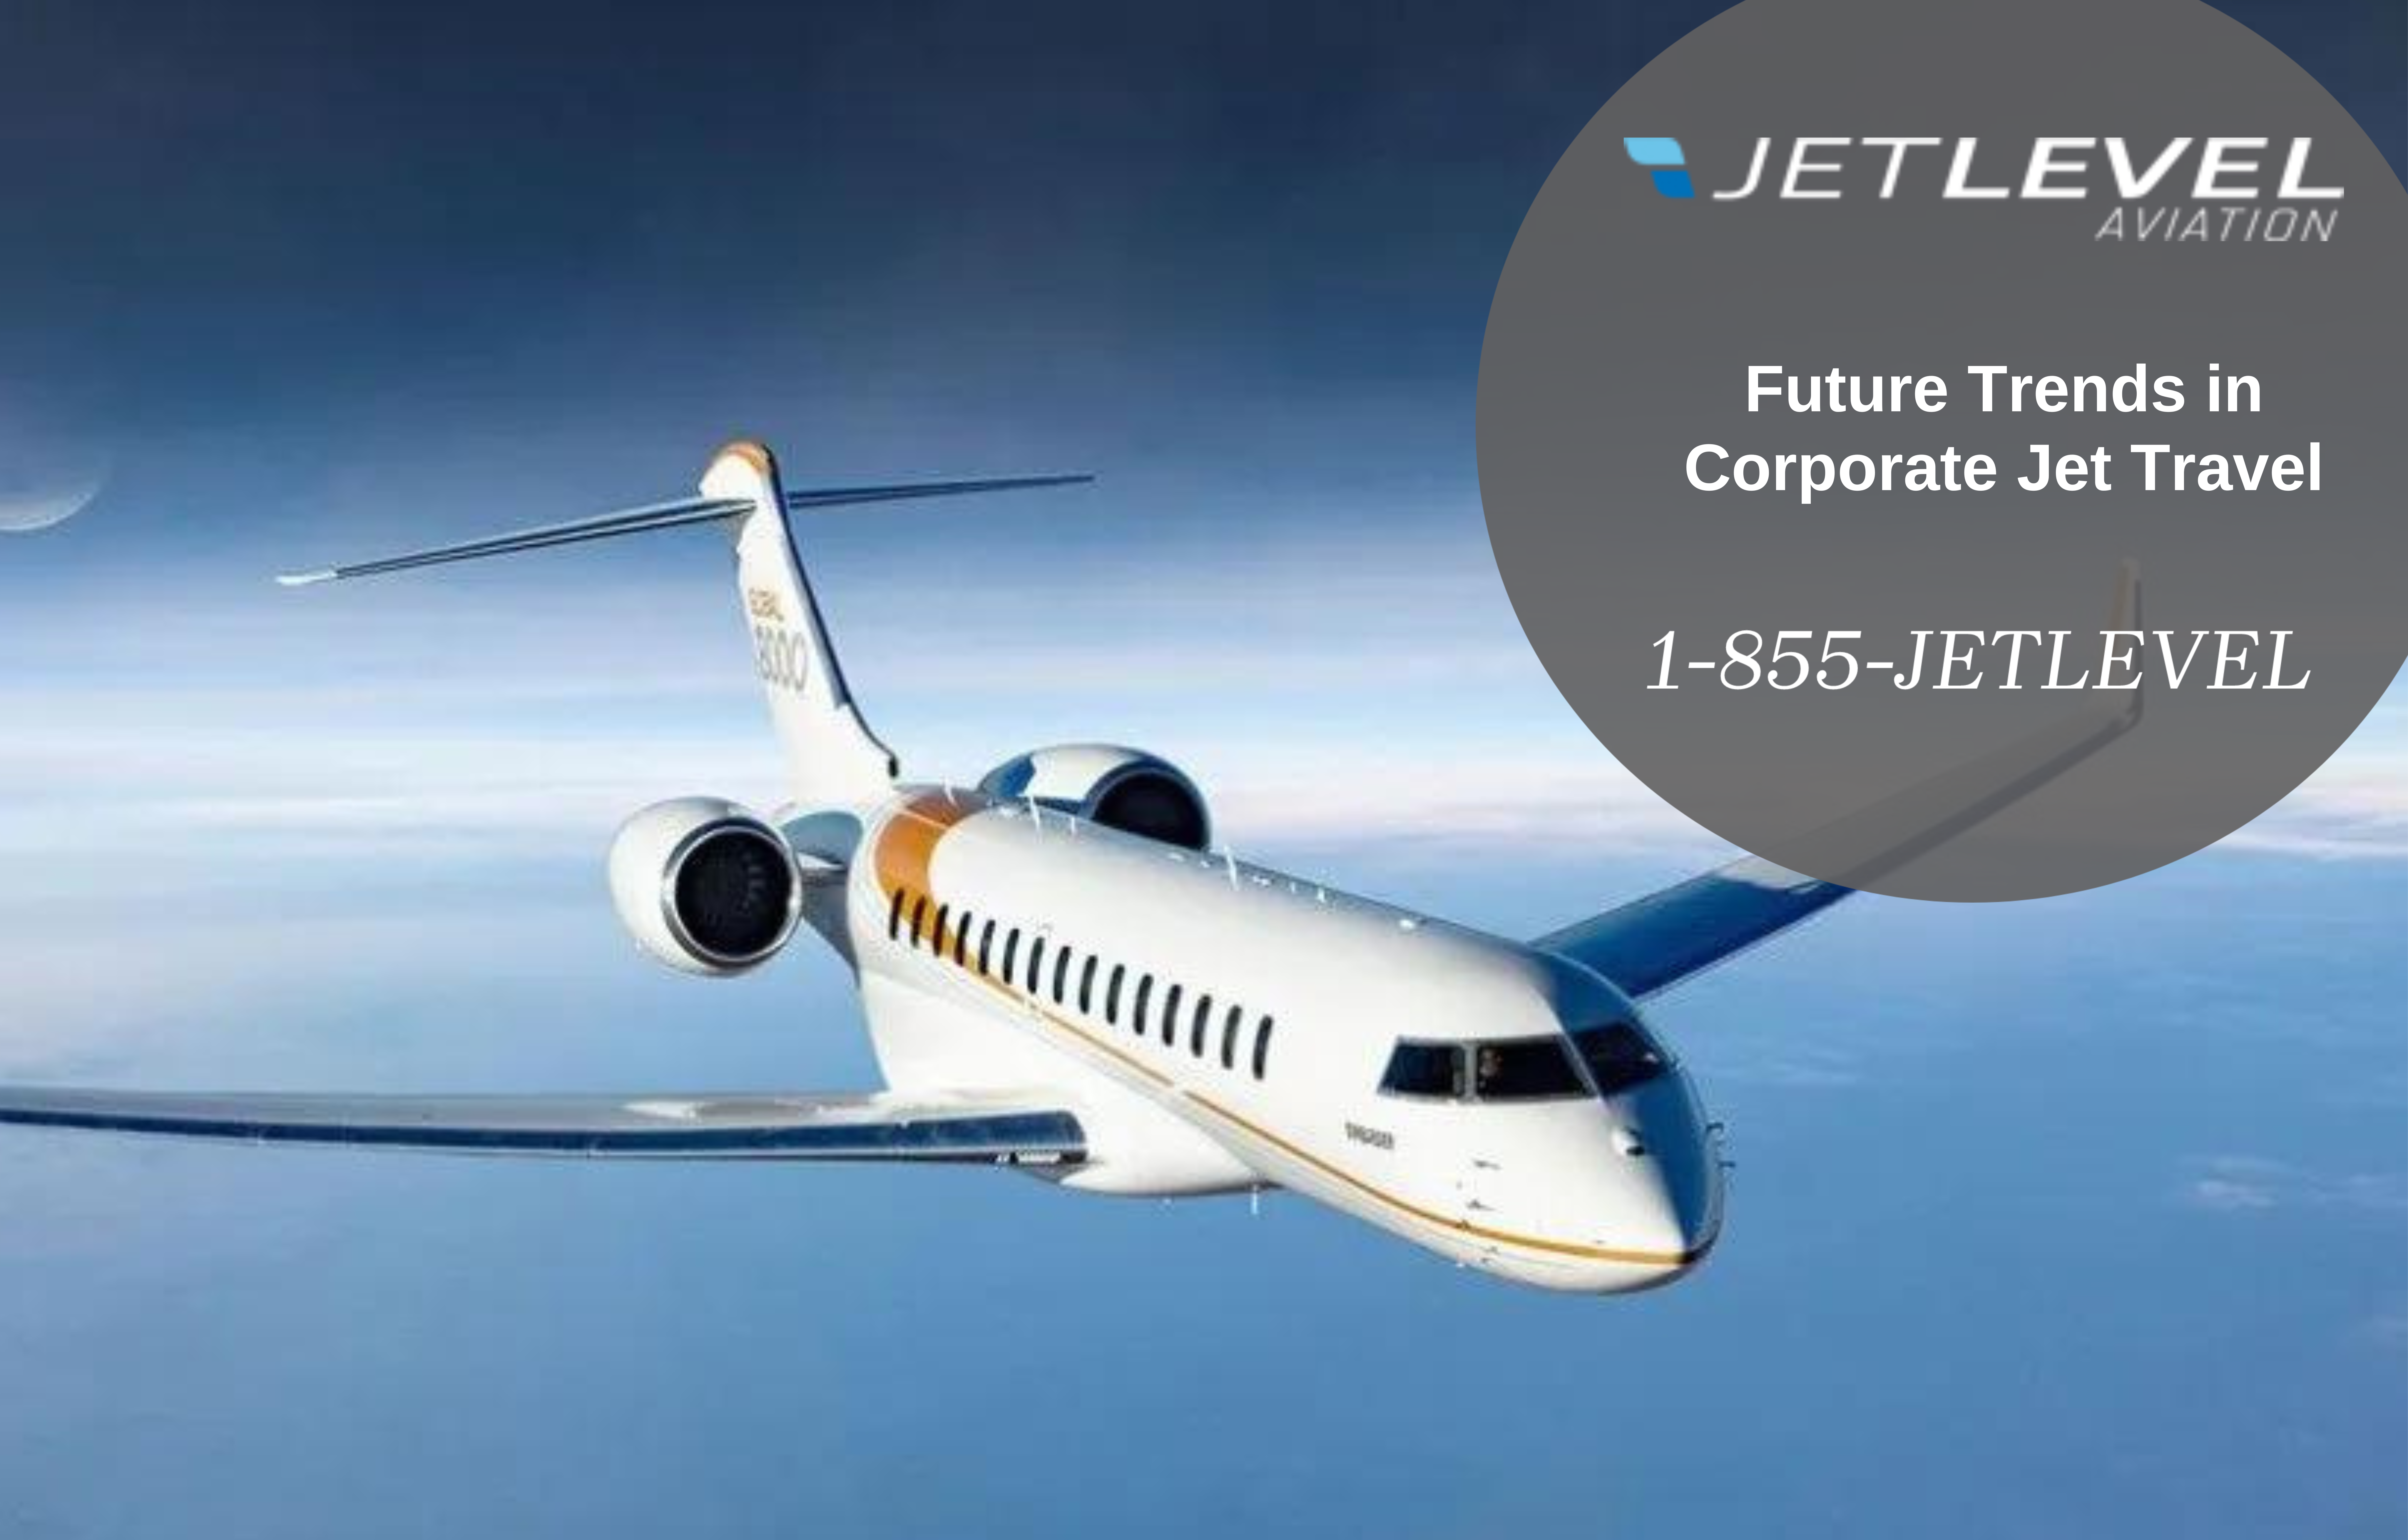 Future Trends in Corporate Jet Travel